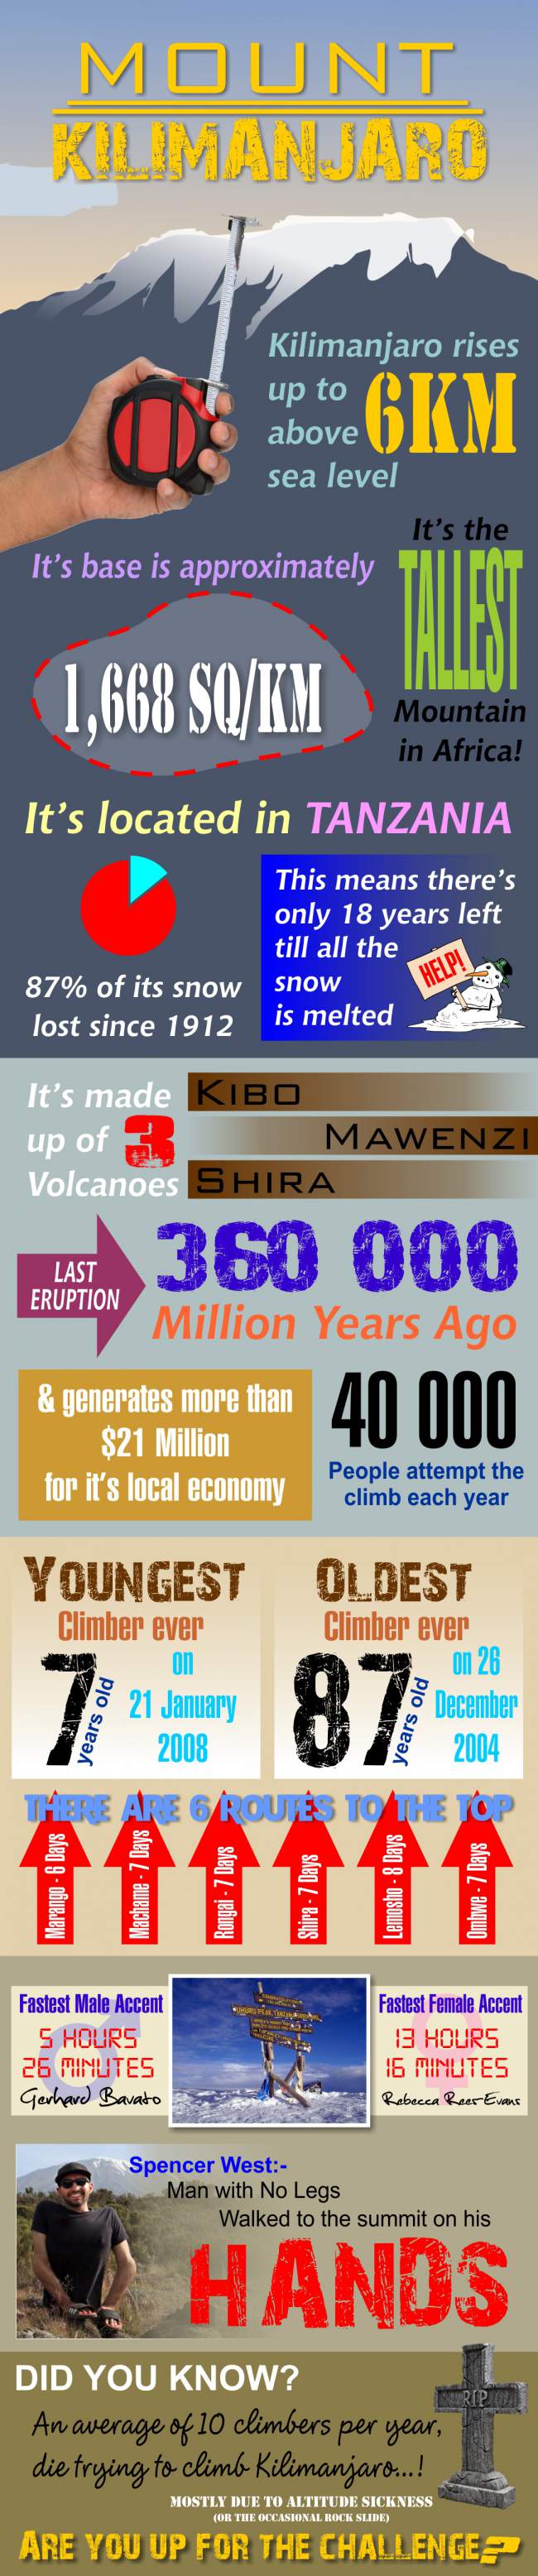 Fun Facts About Kilimanjaro